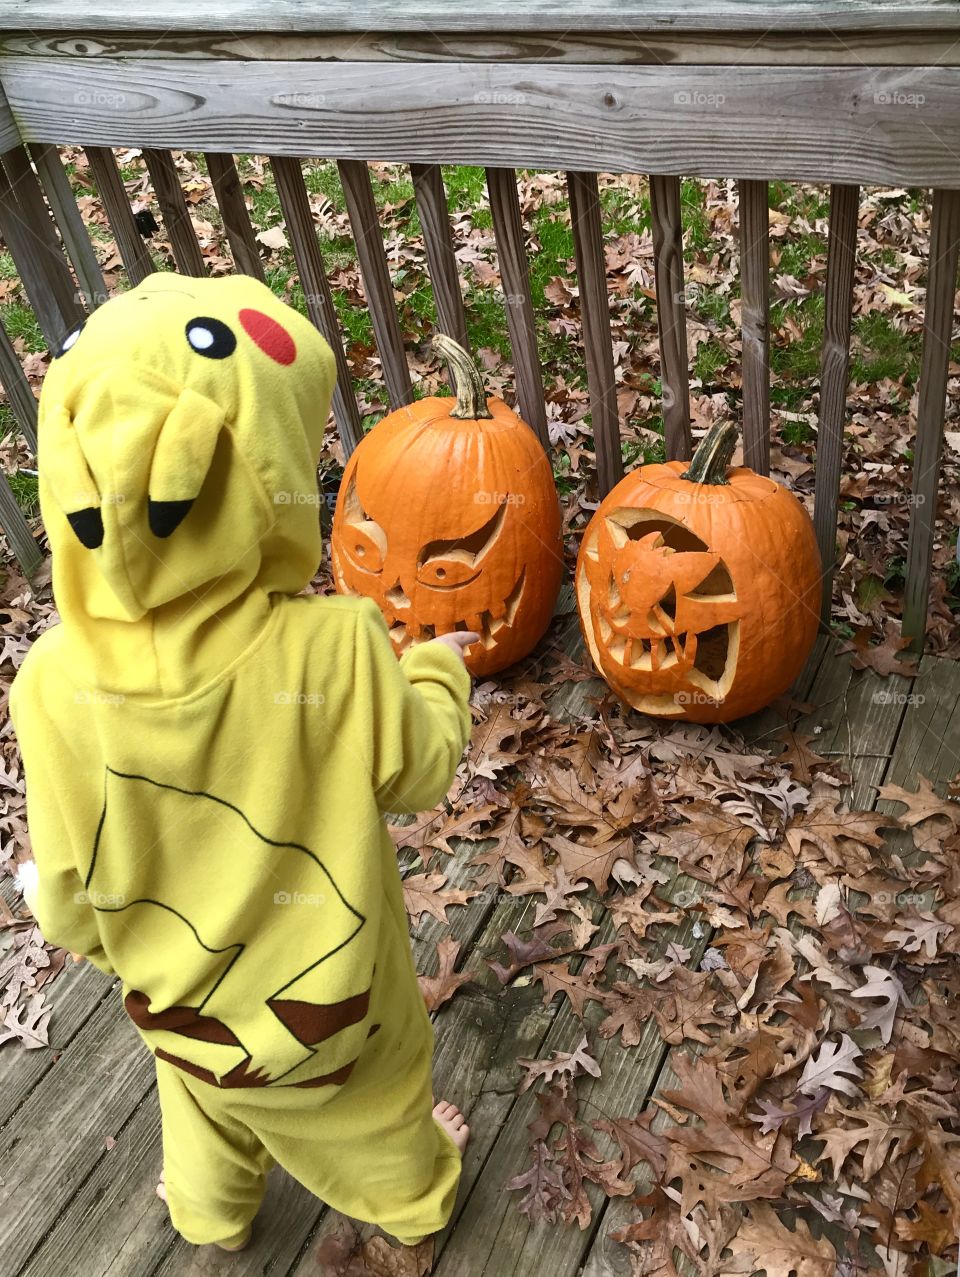 Little boy wearing Pikachu Pajamas admiring his carved pumpkins